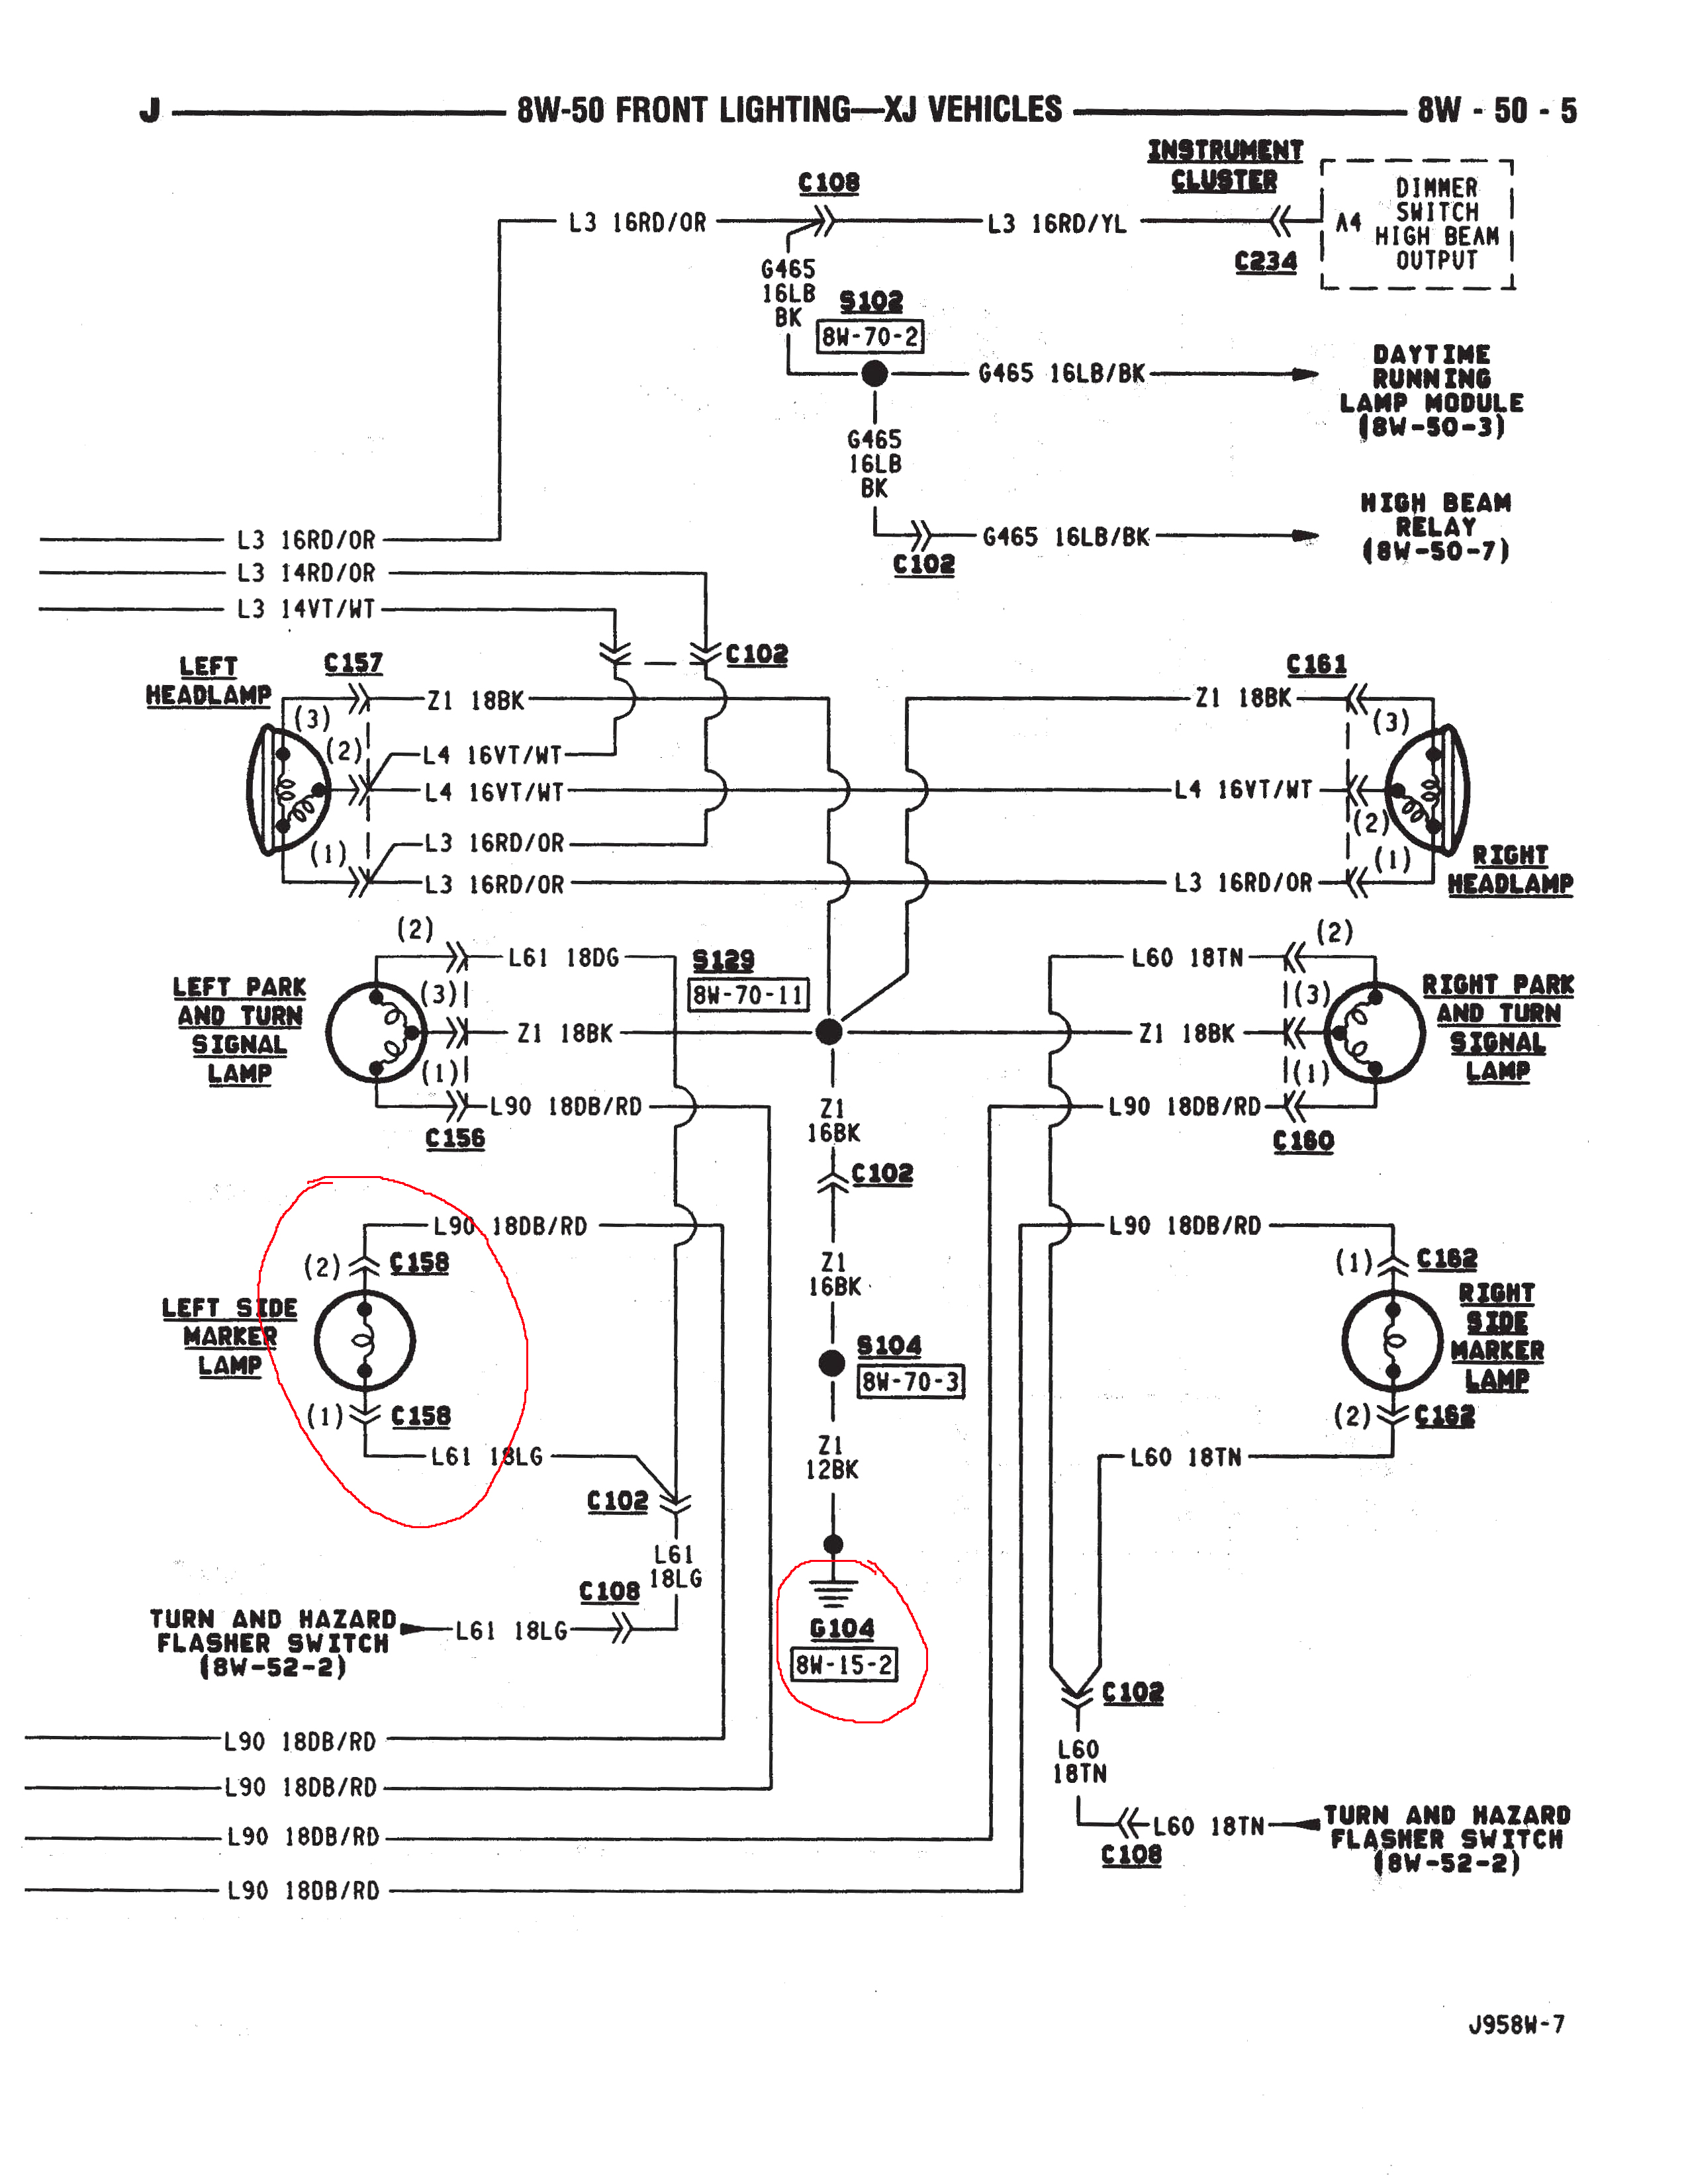 1996-xj-wiring-8w-50-5.jpg